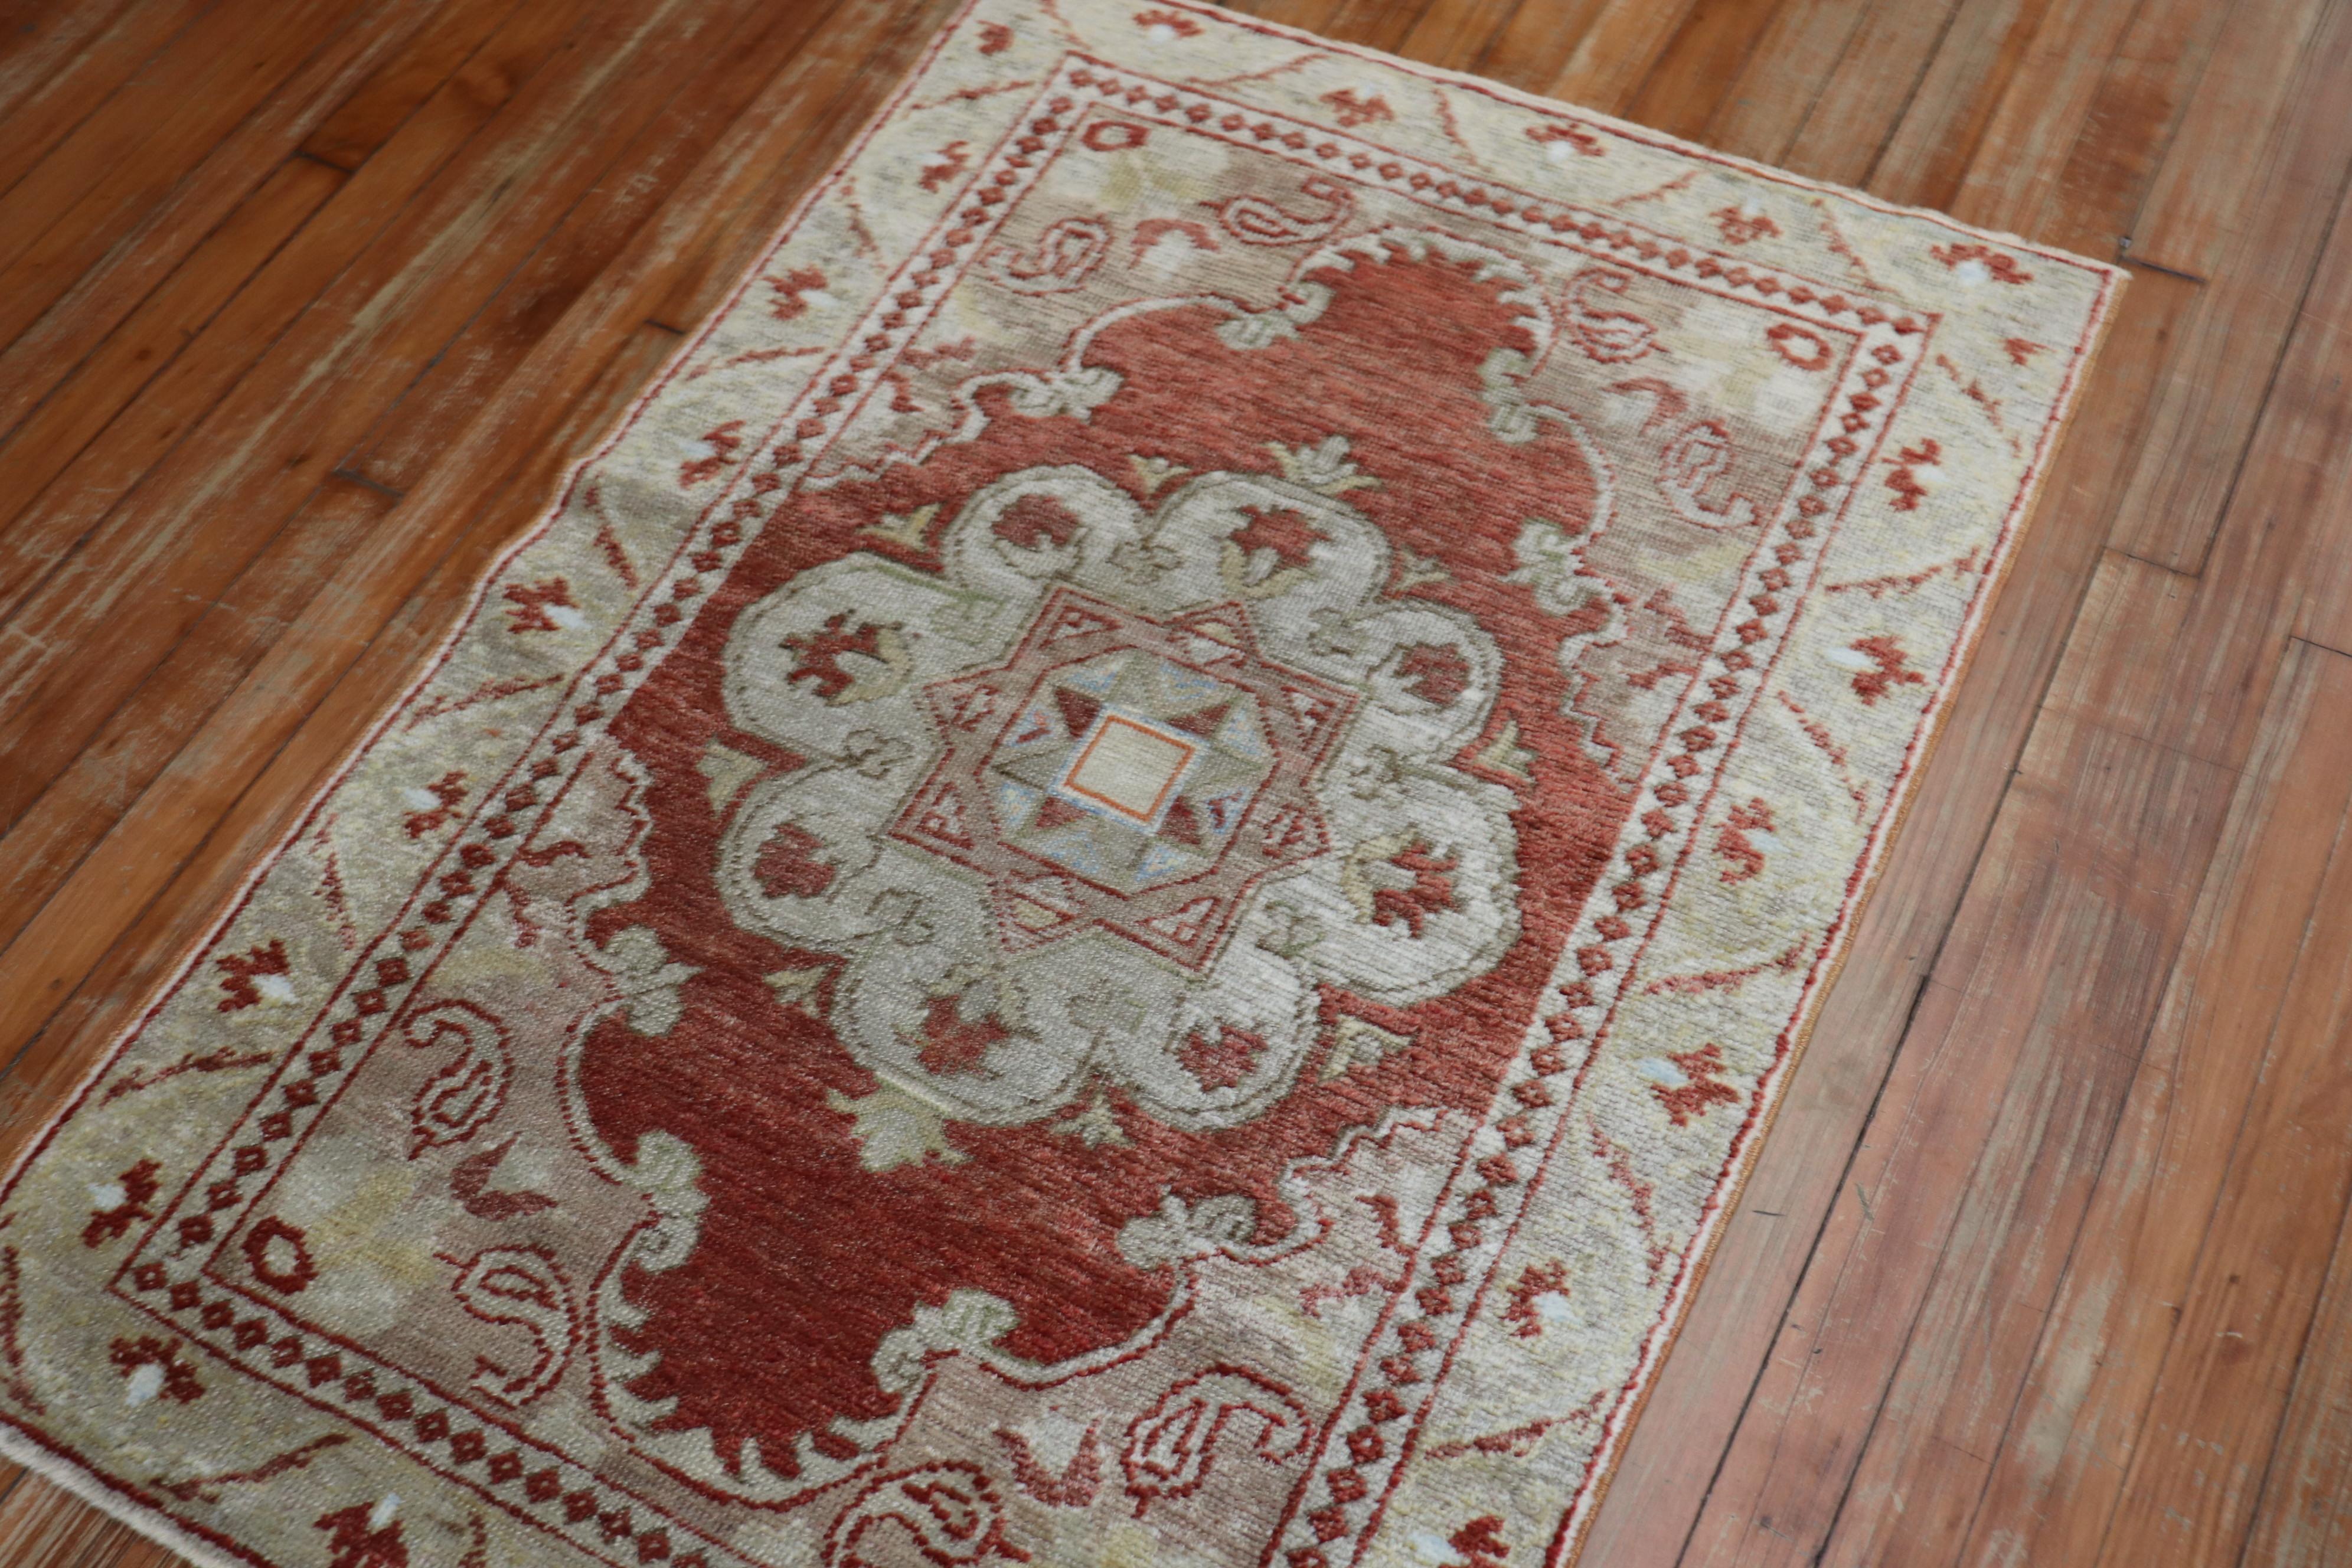 Mid-20th century Turkish rug in crimson red

Size: 2'10